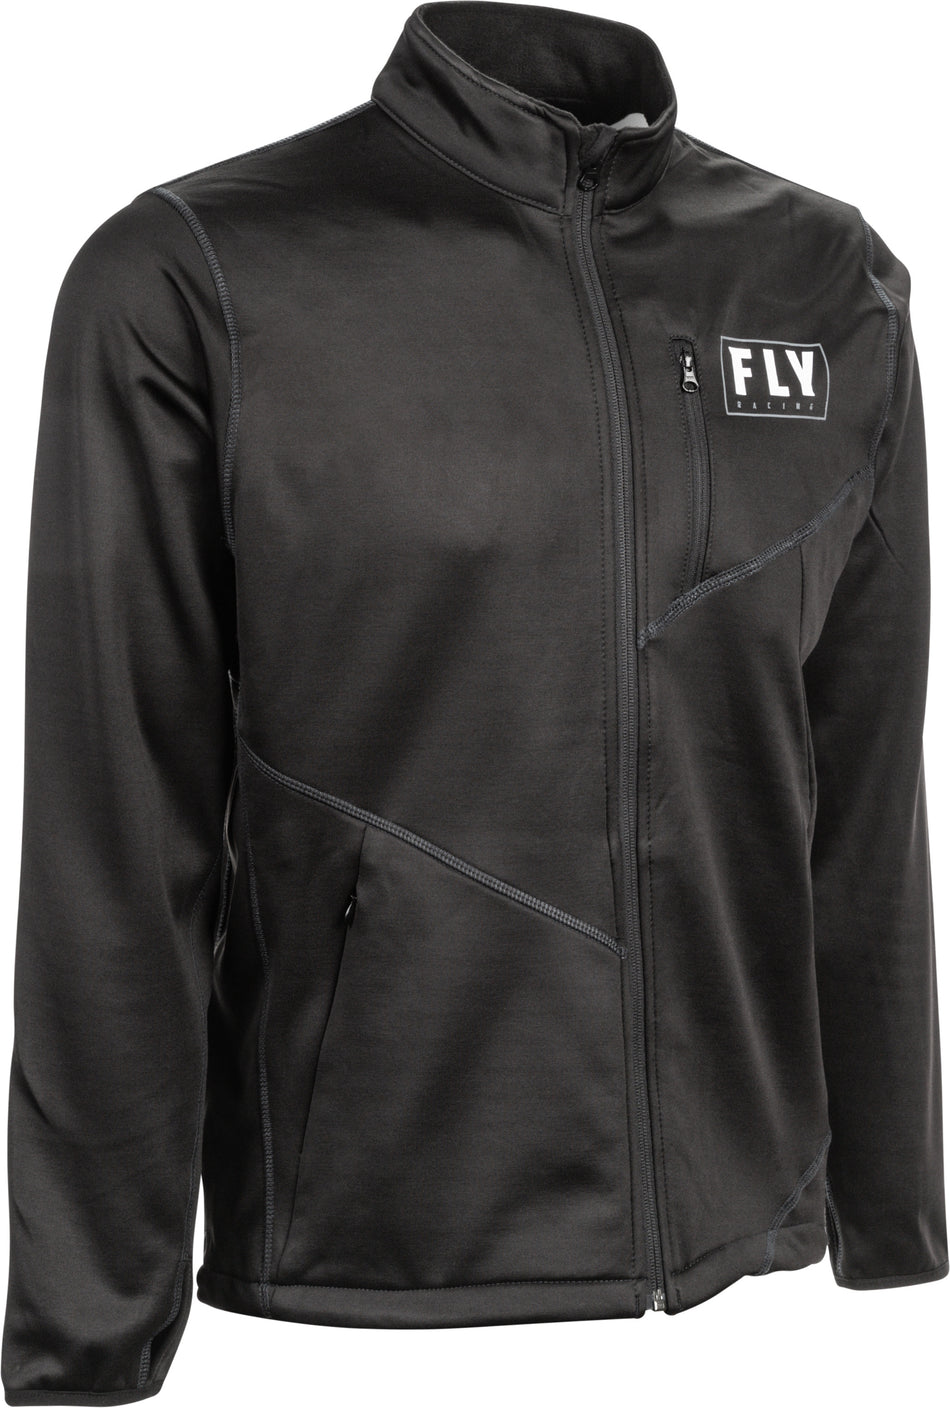 FLY RACING Mid-Layer Jacket Black 2x 354-63202X